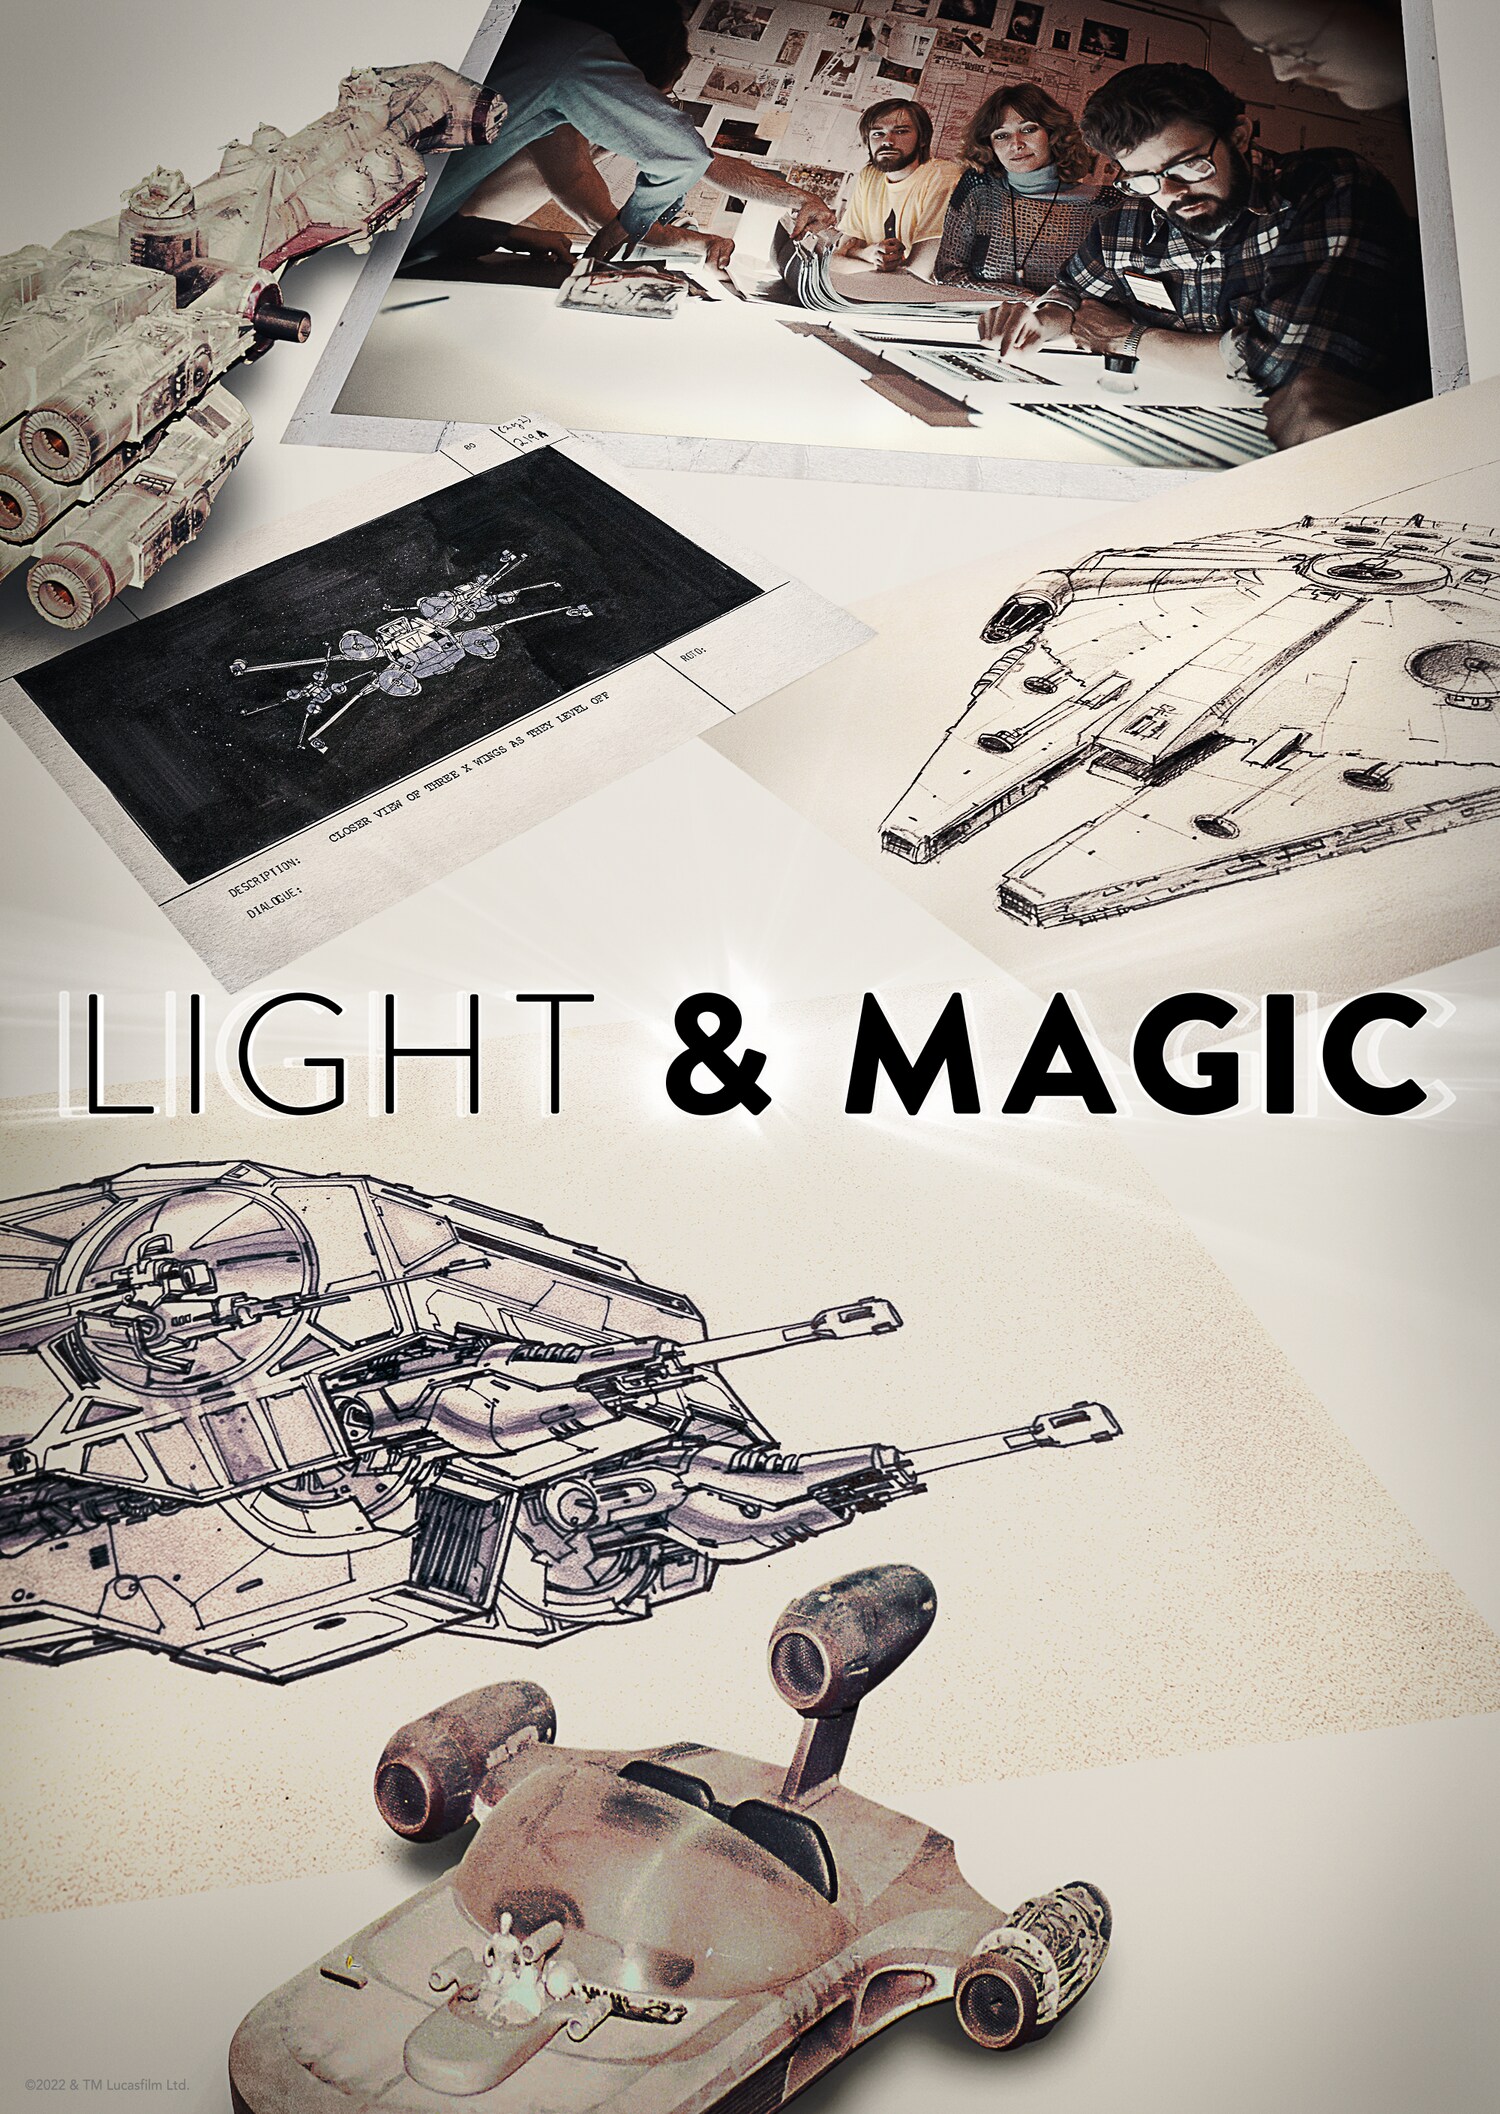 Light & Magic | now streaming